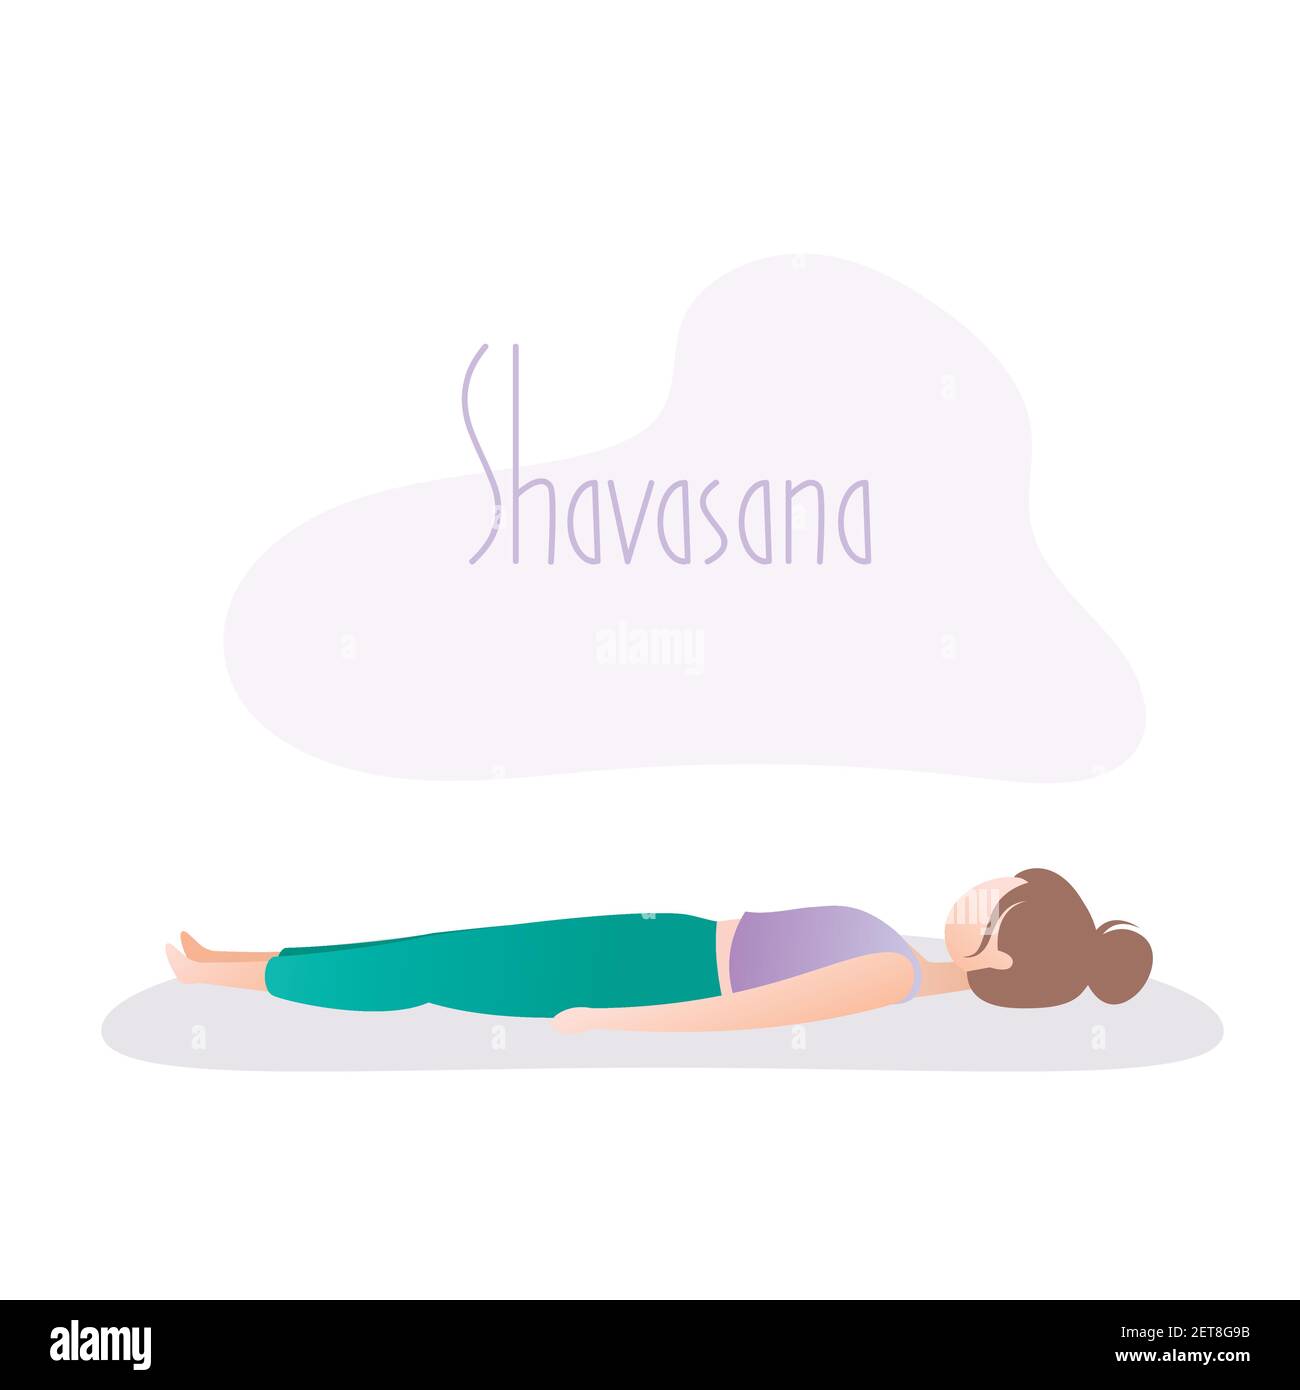 Girl doing yoga pose,Corpse Pose or Shavasana asana in hatha yoga,vector illustration in trendy style Stock Vector